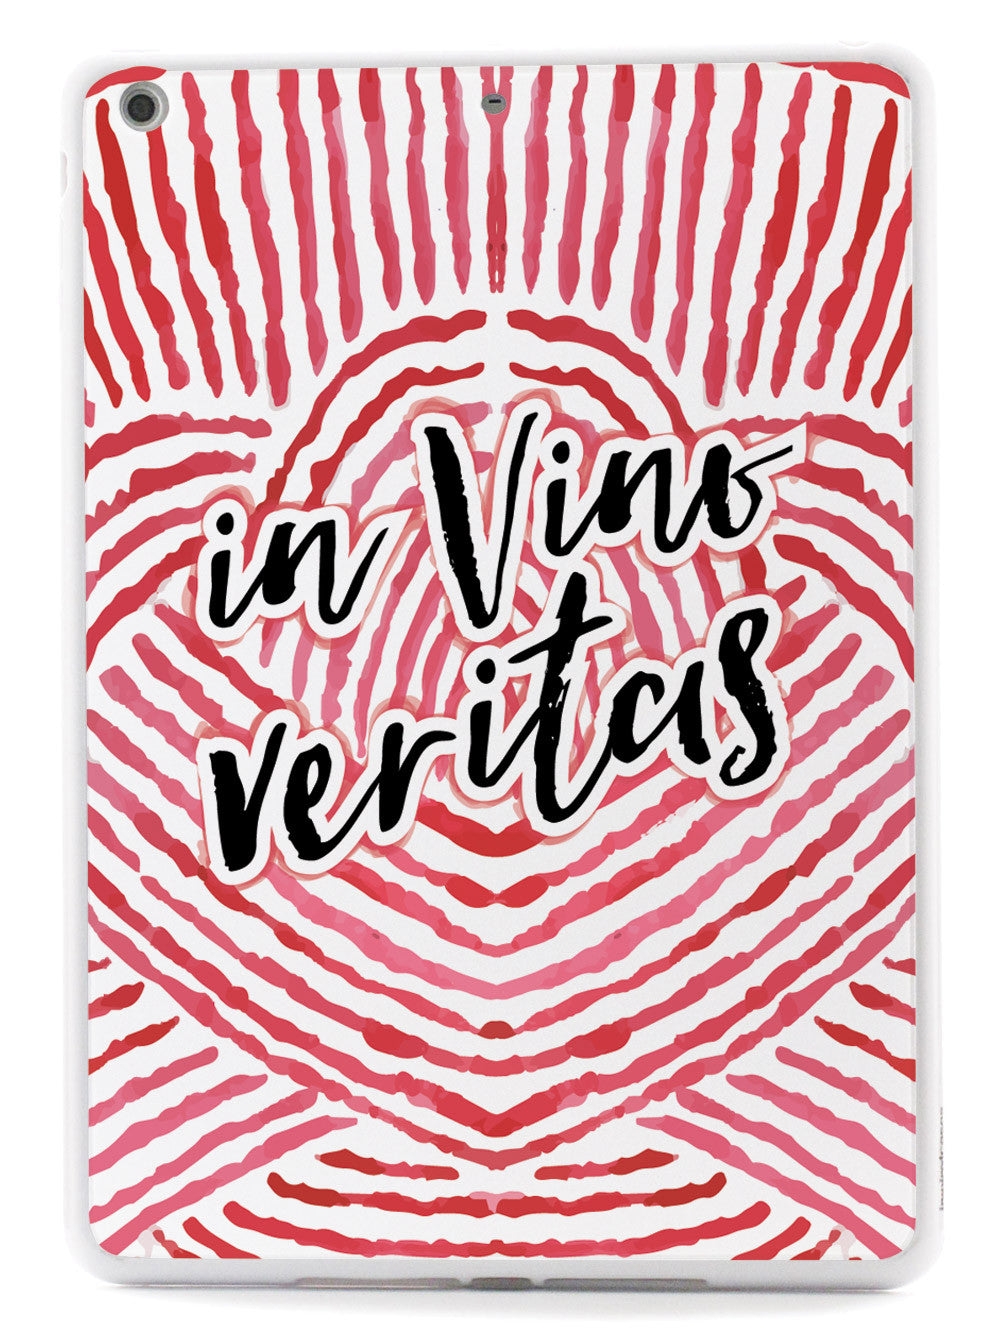 In Vino Veritas - Wine Case